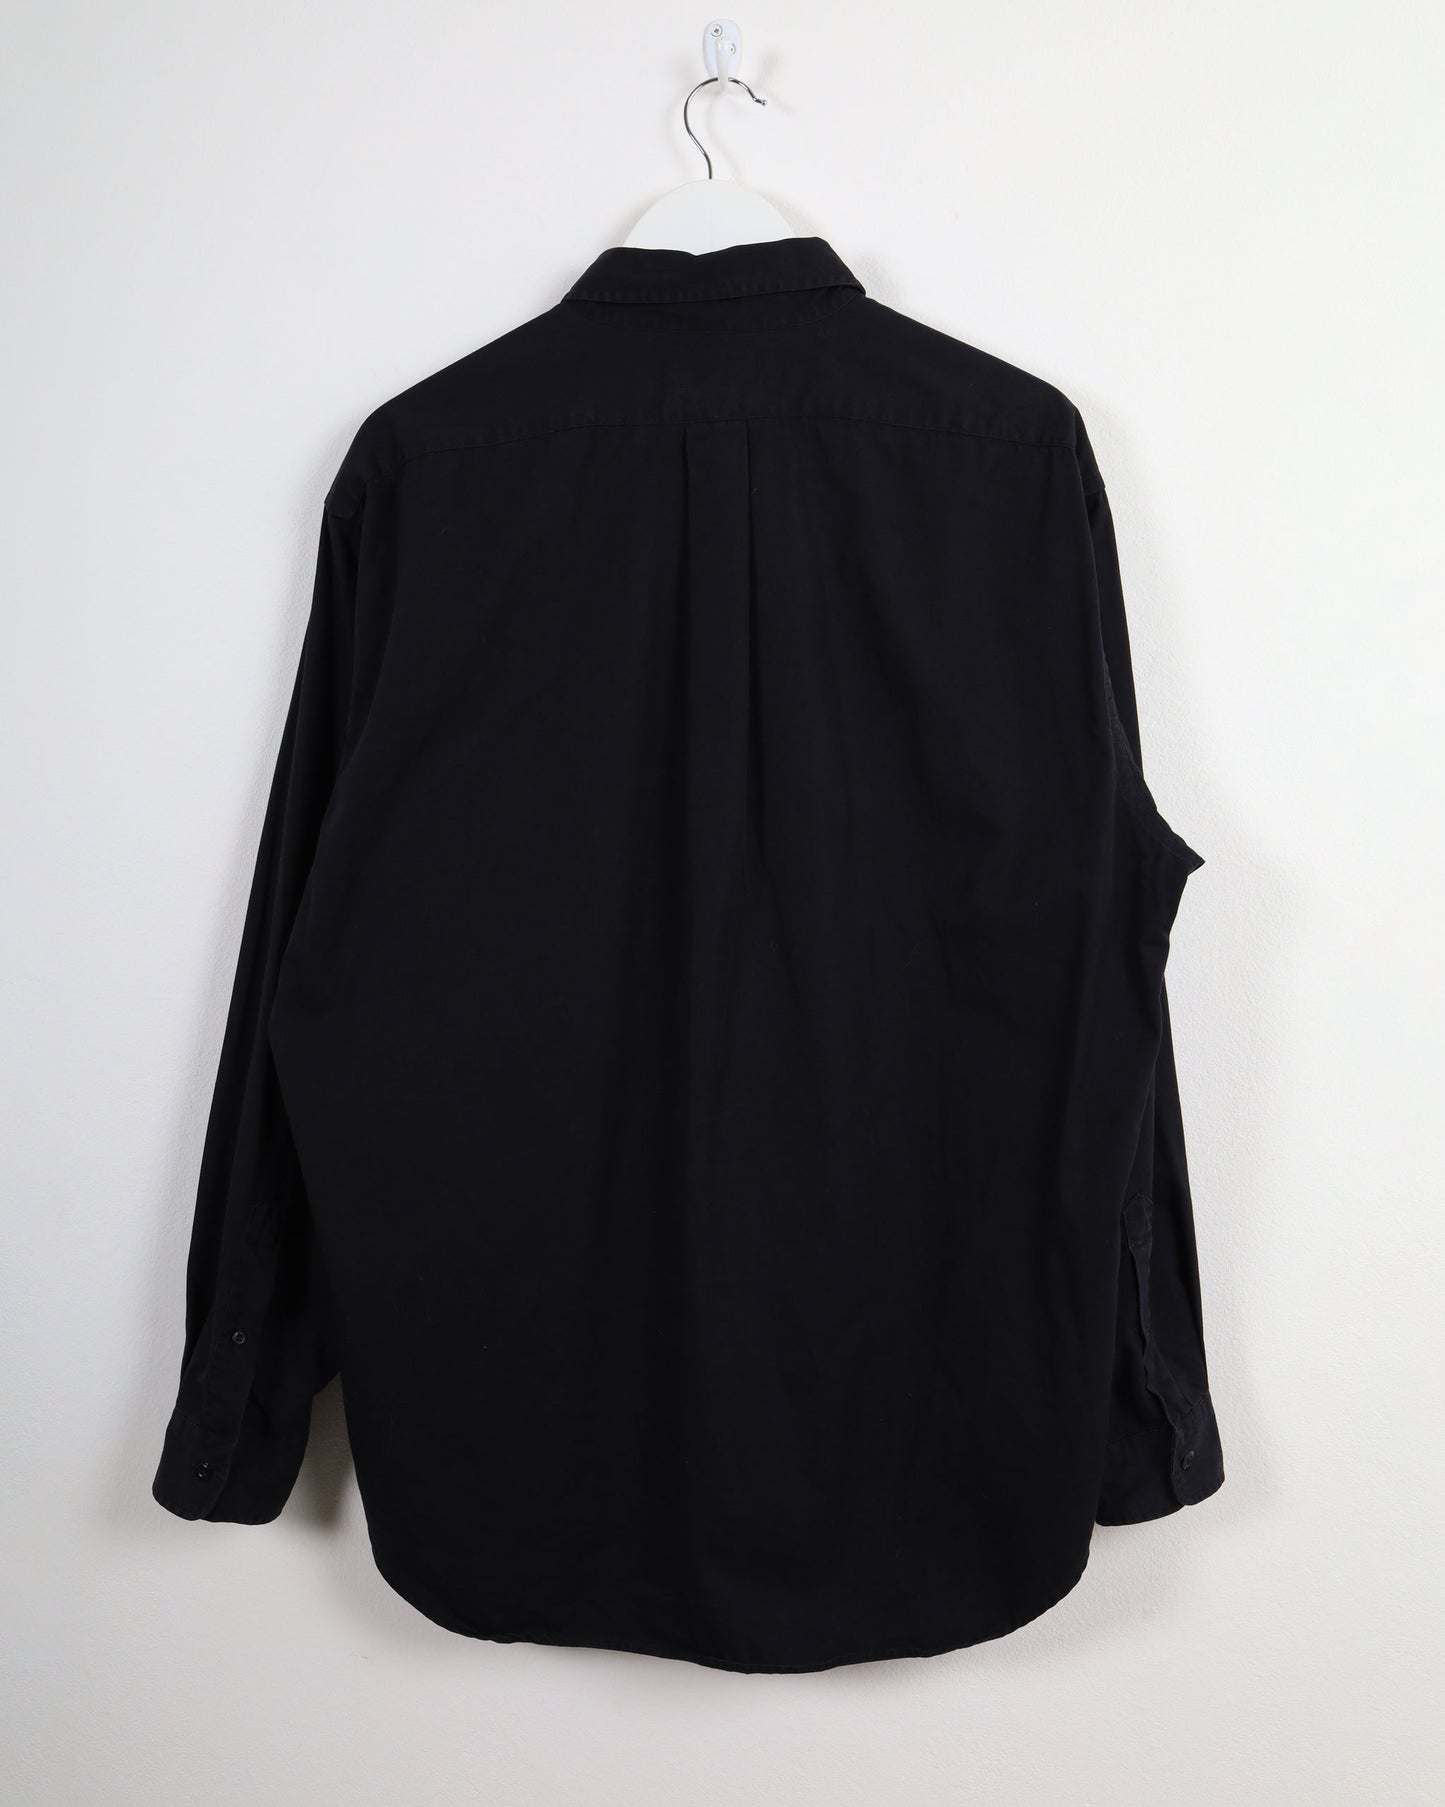 Ralph Lauren Jeans Co. Long Sleeve Pocket Shirt Black